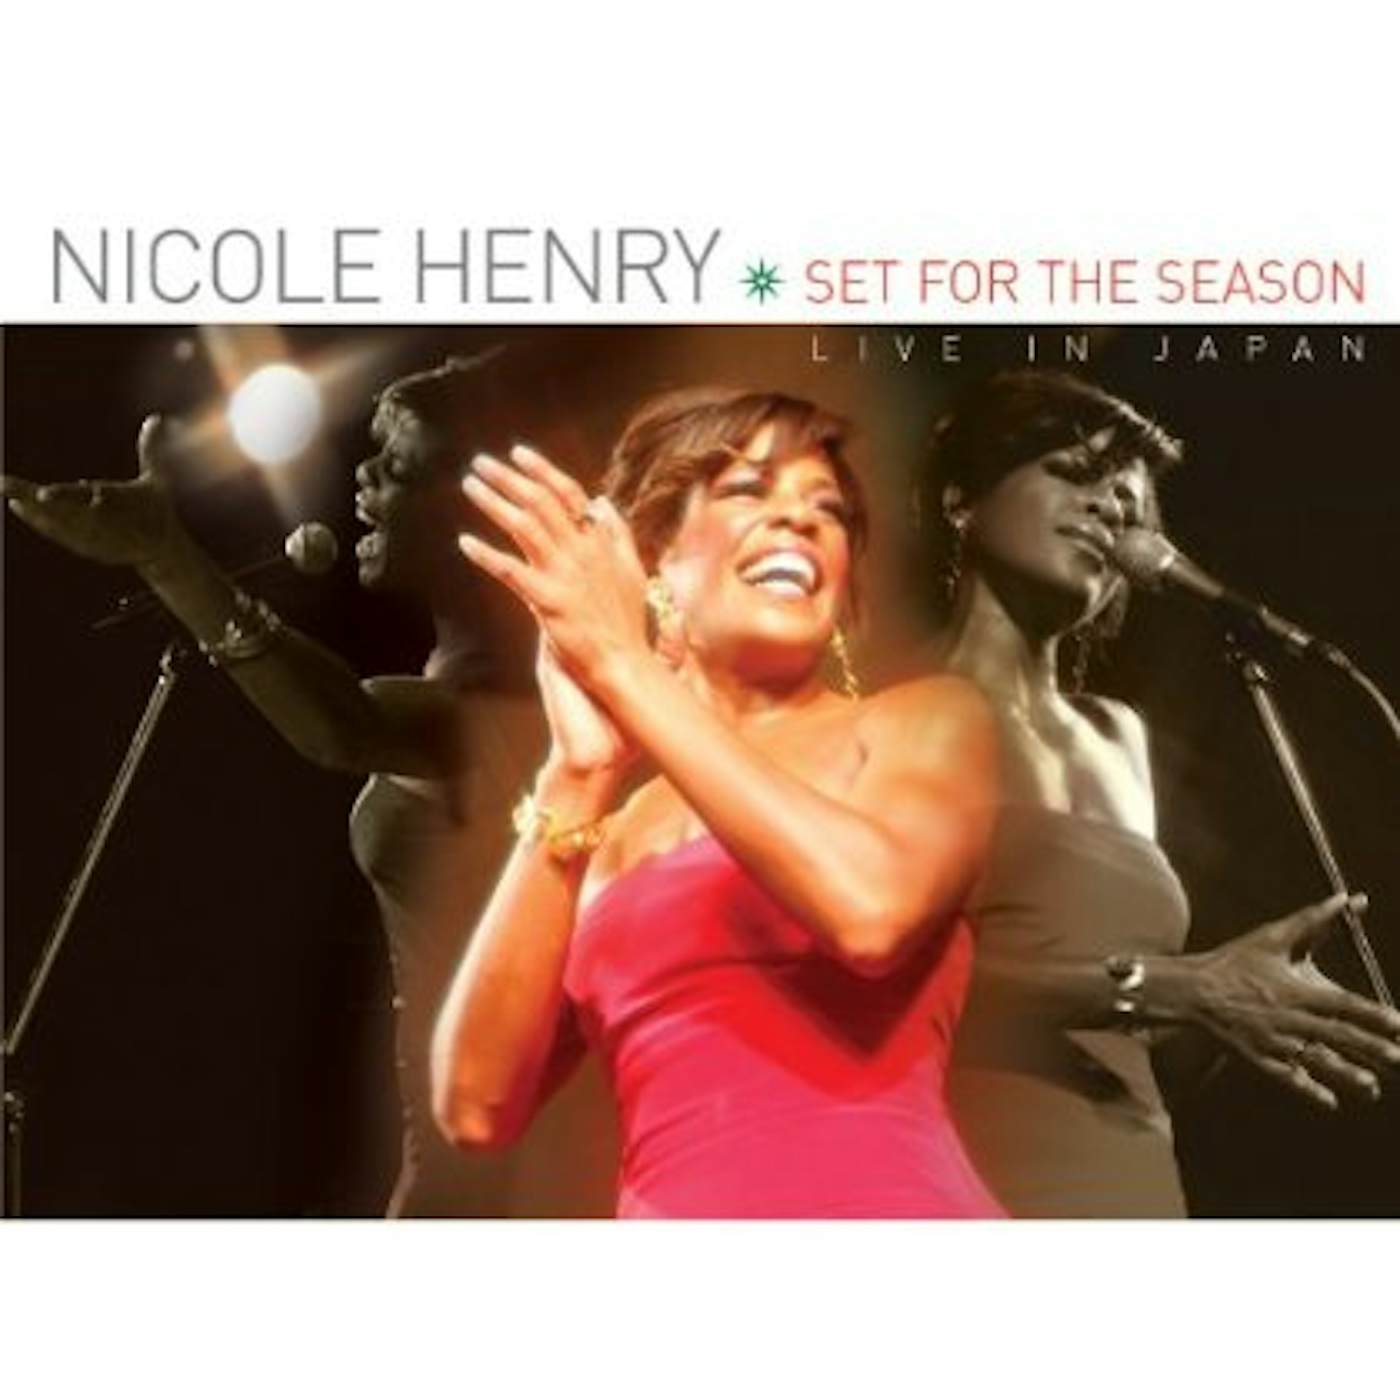 Nicole Henry SET FOR THE SEASON CD